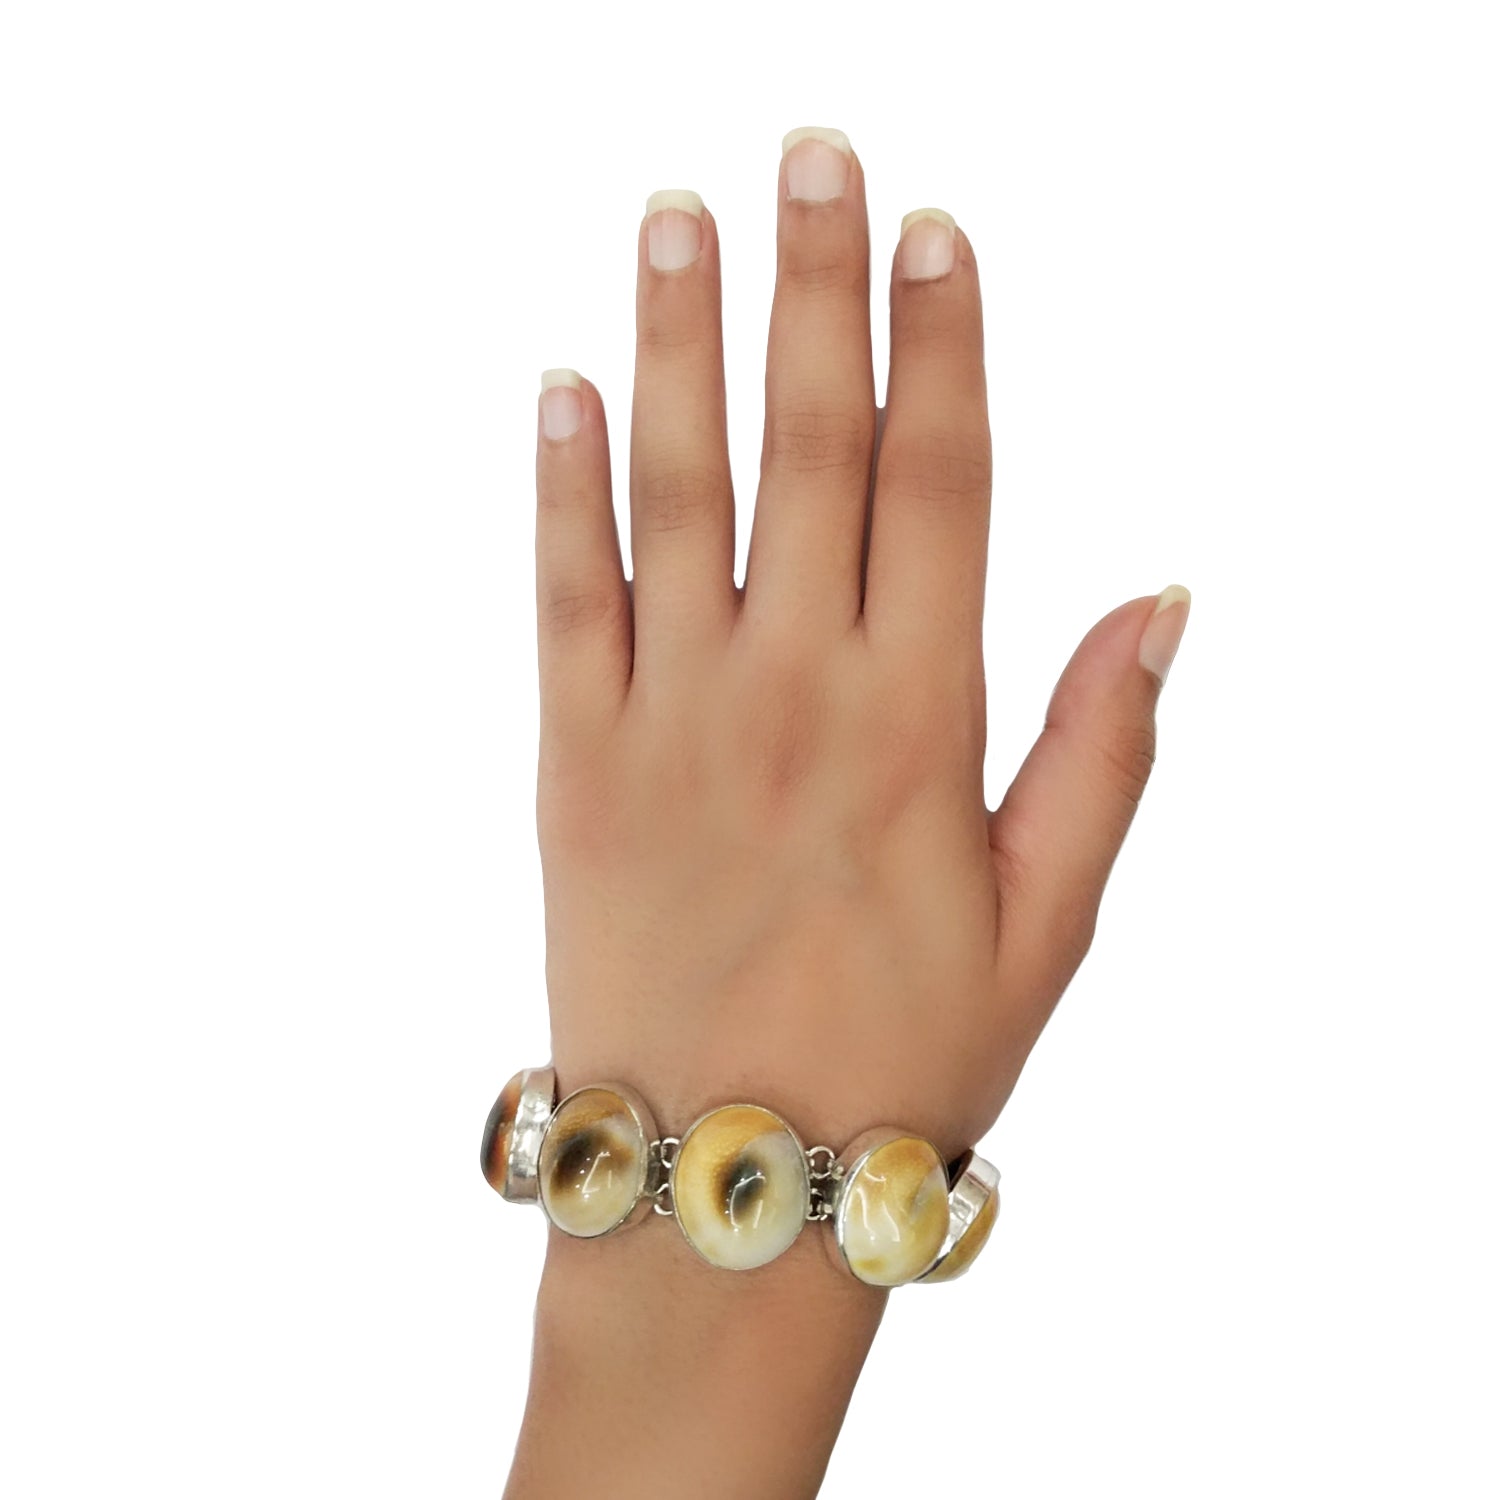 ARIHANT HANDICRAFTS Gomti Chakra Bracelet with Howlite Stones (White, Free  Size), Stone : Amazon.com.au: Clothing, Shoes & Accessories